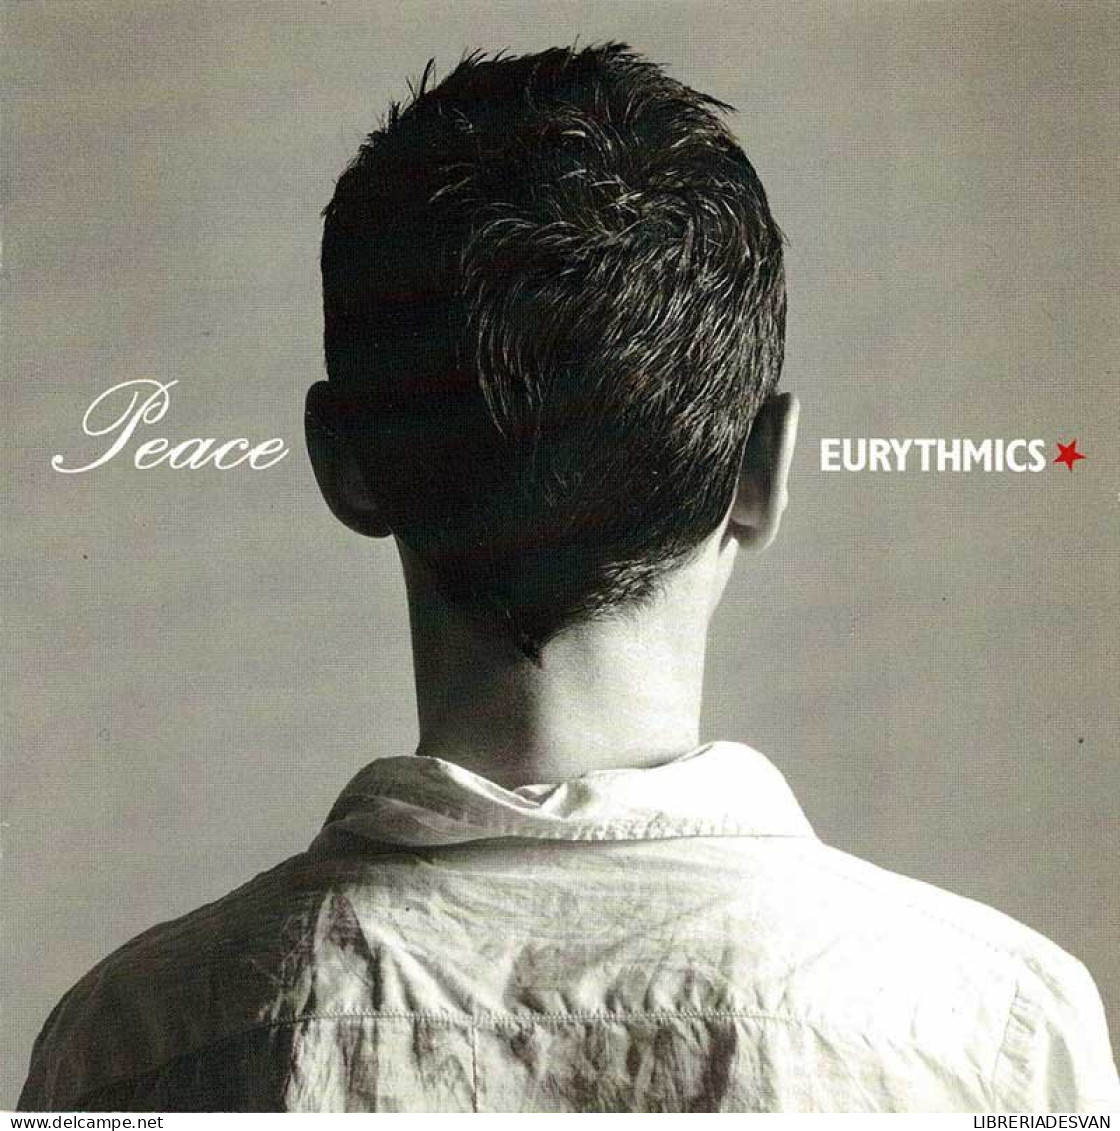 Eurythmics - Peace. CD - Disco, Pop